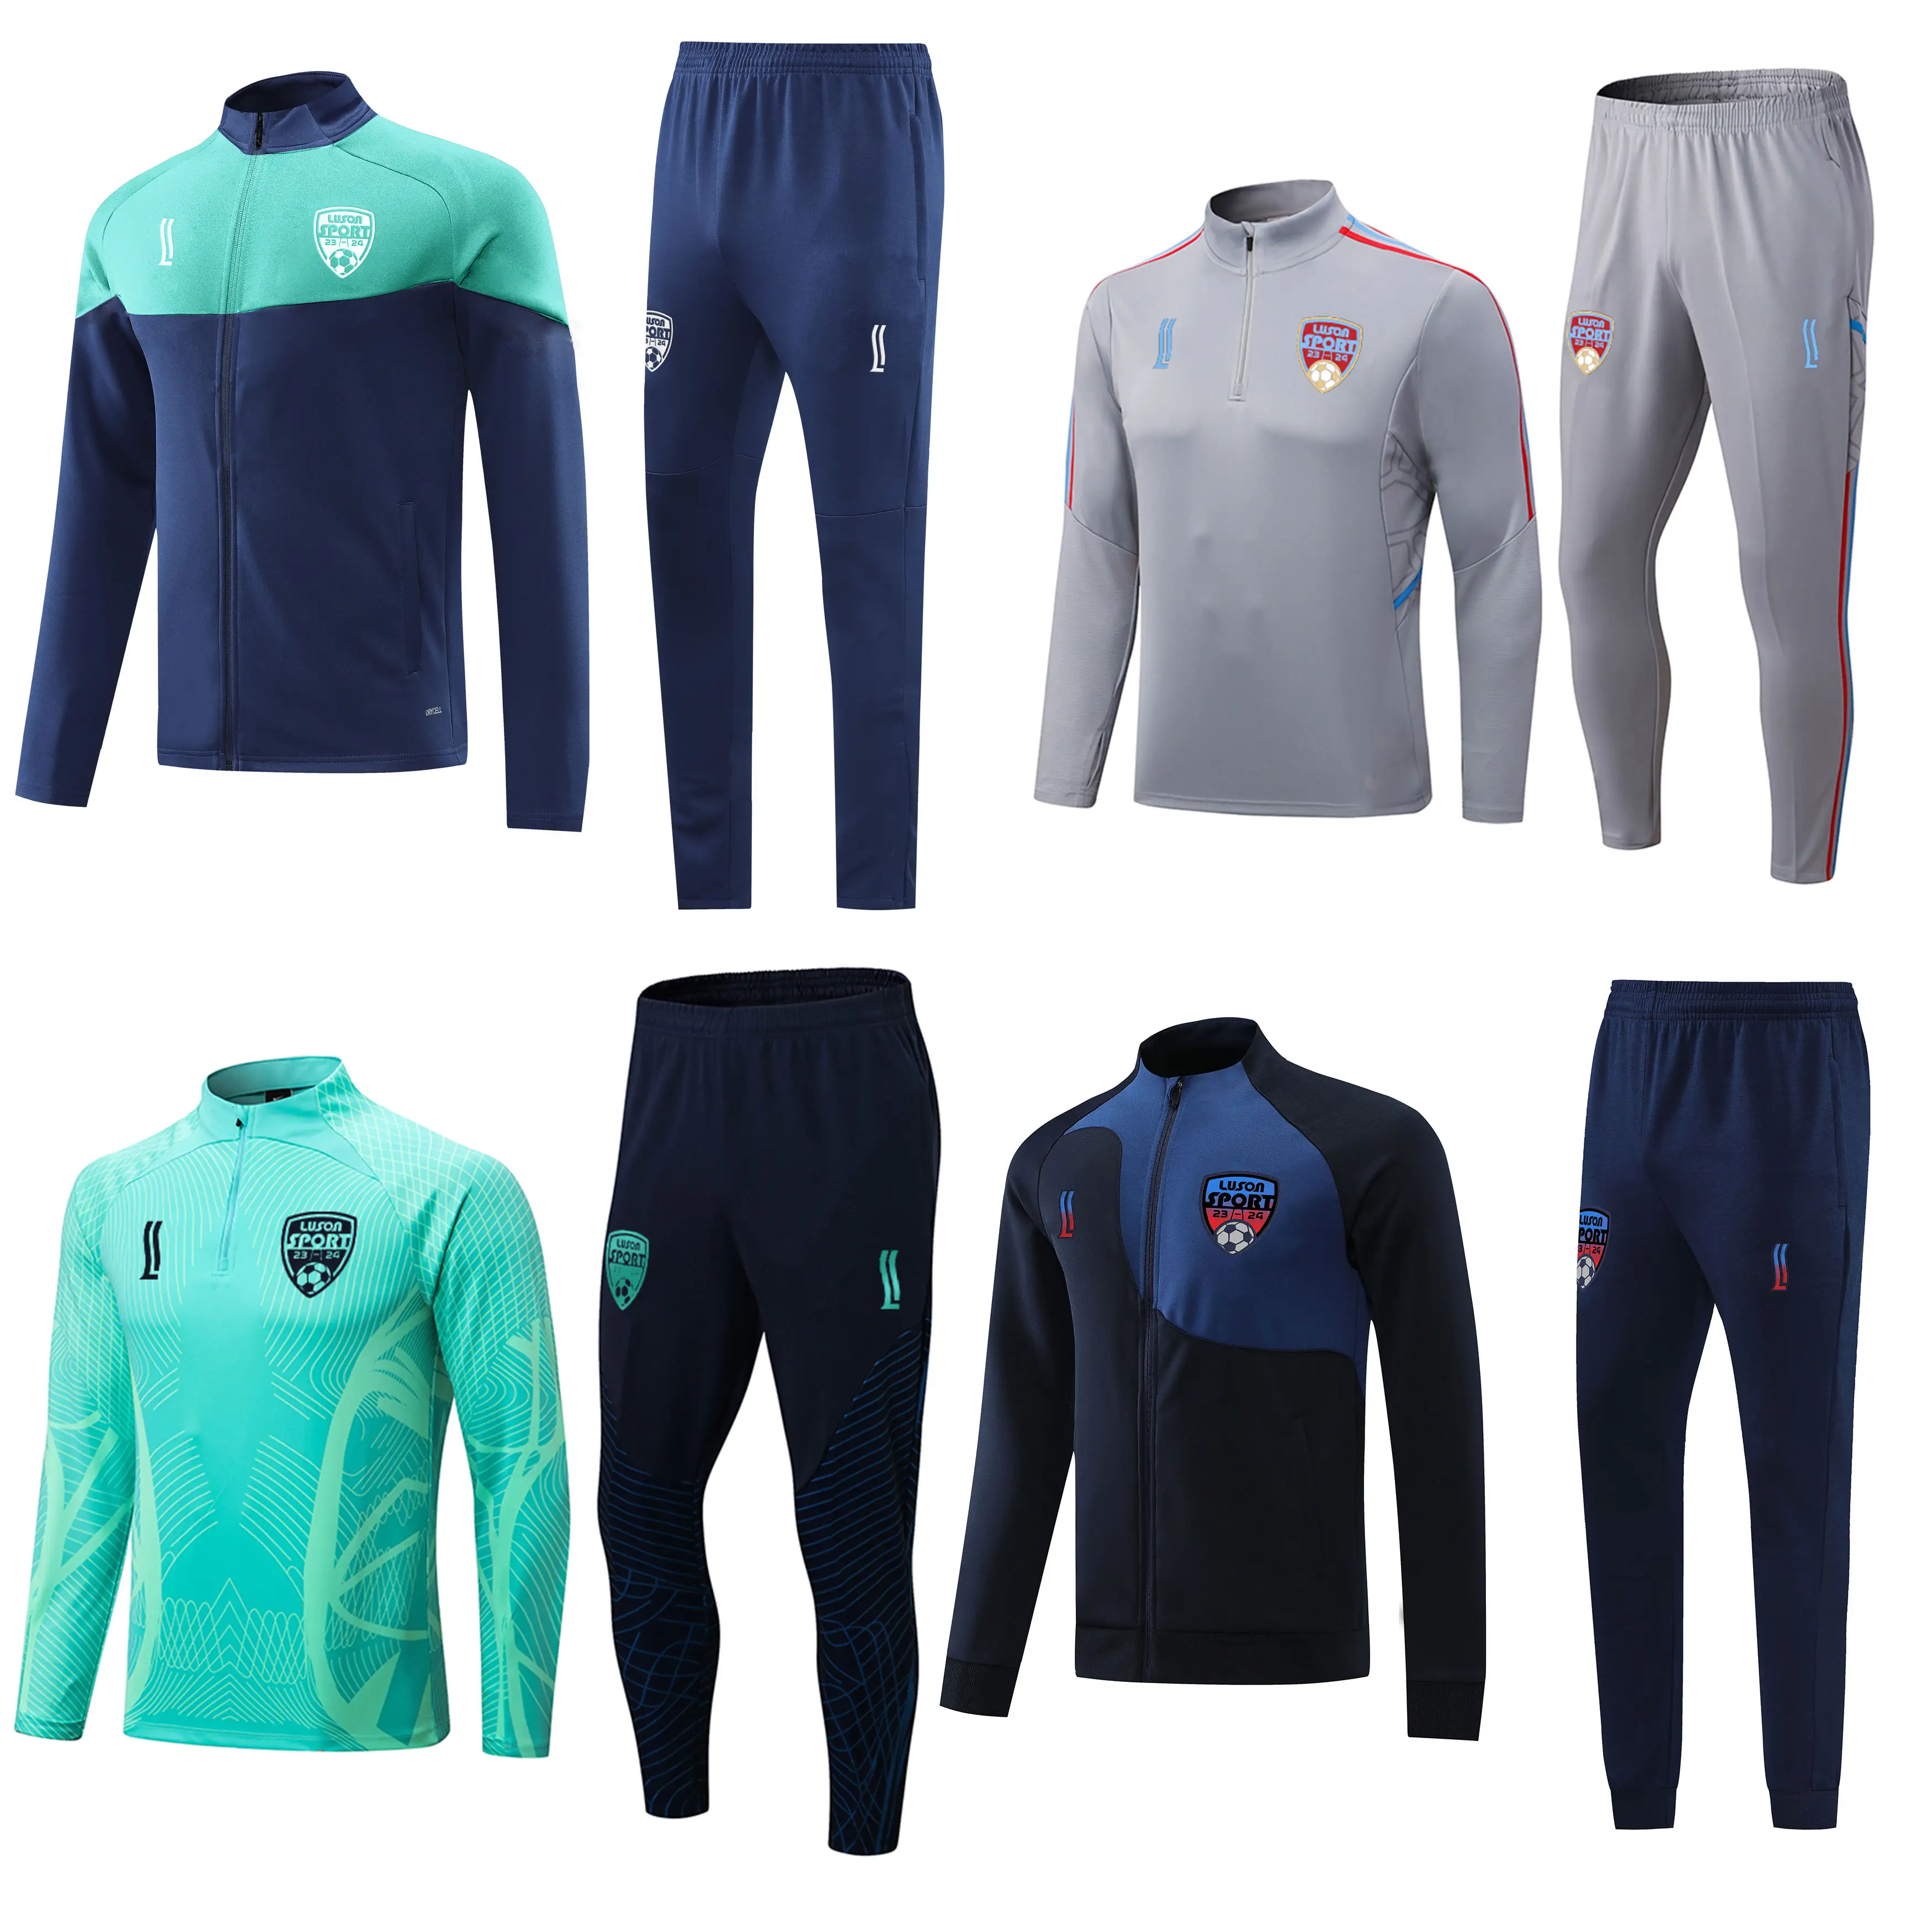 Kits de fútbol Luson, conjunto completo, ropa de fútbol, kits de fútbol azul para equipos, Kit de entrenamiento de fútbol, camiseta de fútbol personalizada